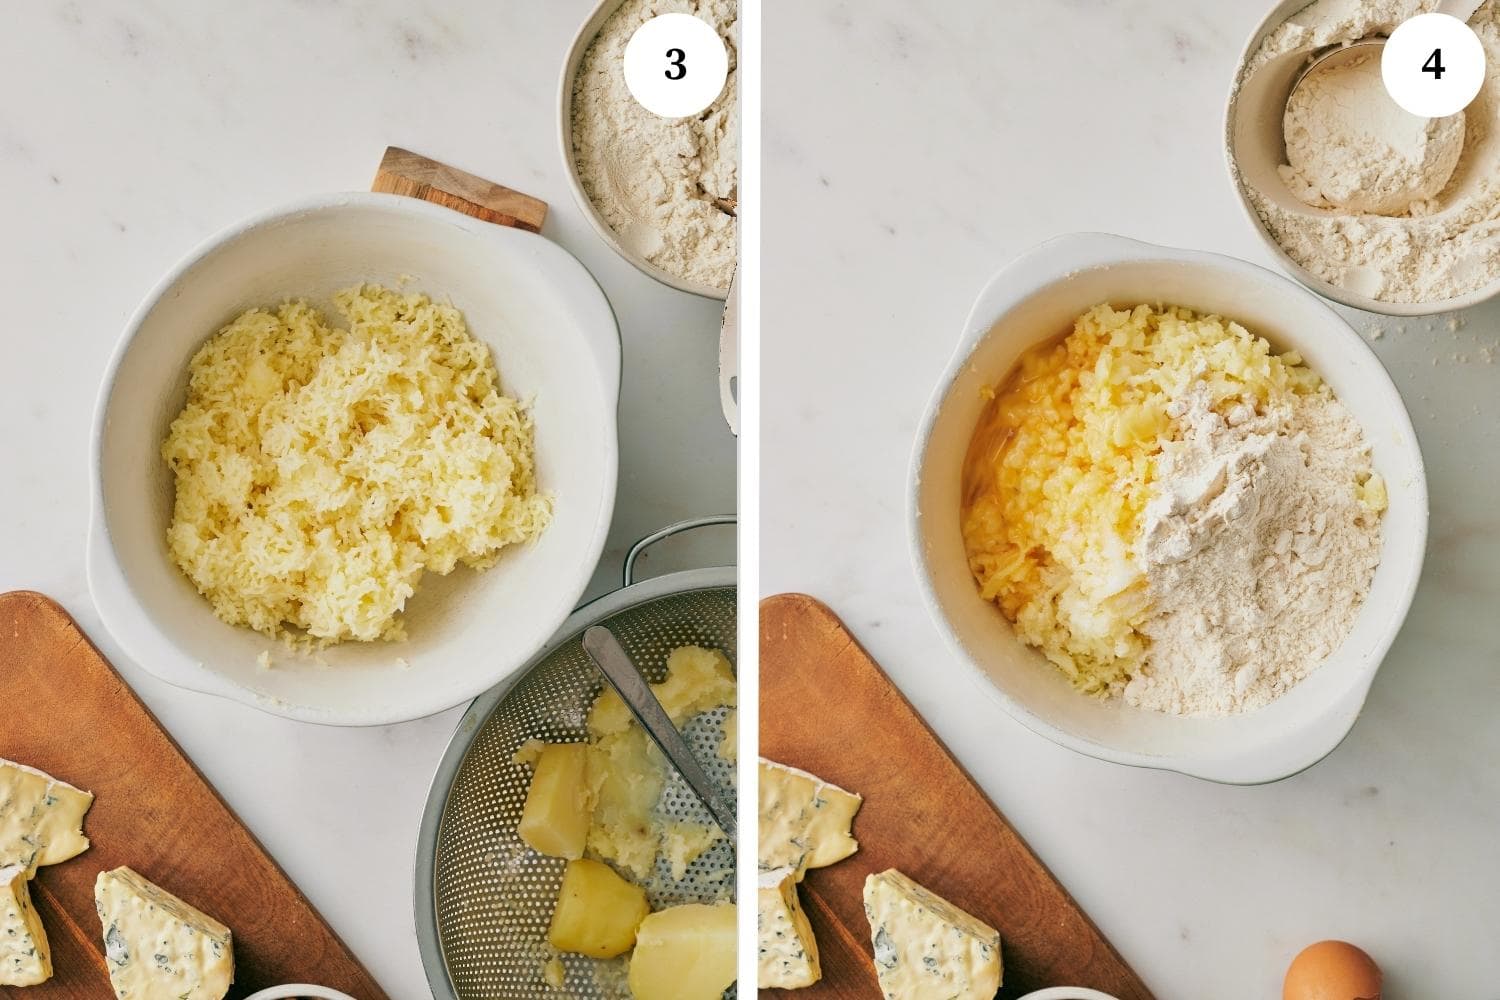 gnocchi with gorgonzola procedure: mashed potato in a bowl. 